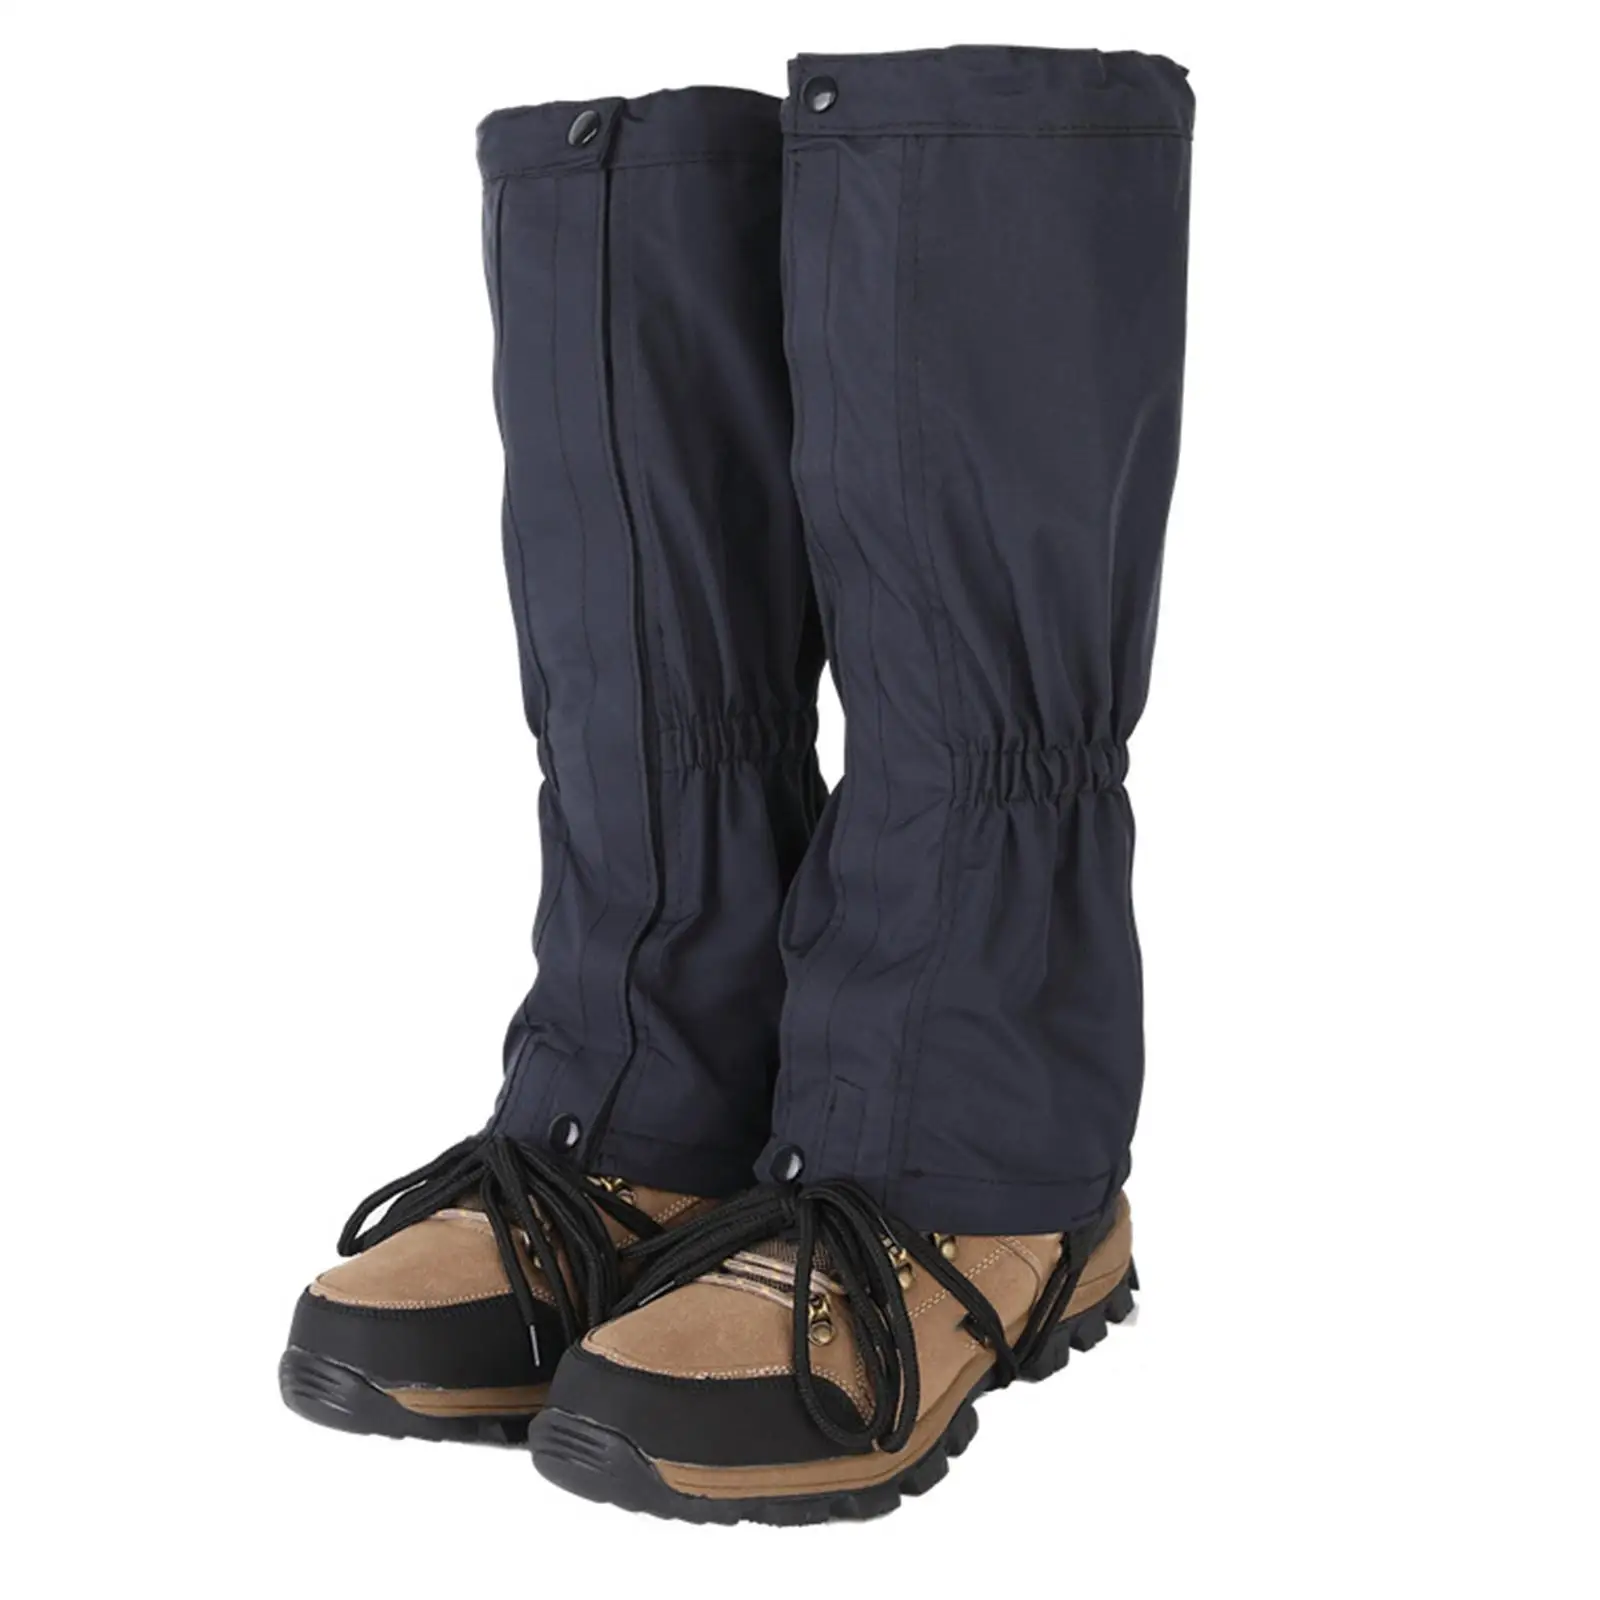 Rainproof Leg legging Legging Guard Adjustable Durable Waterproof Cover for Camping Outdoor Sports Hiking Unisex Running